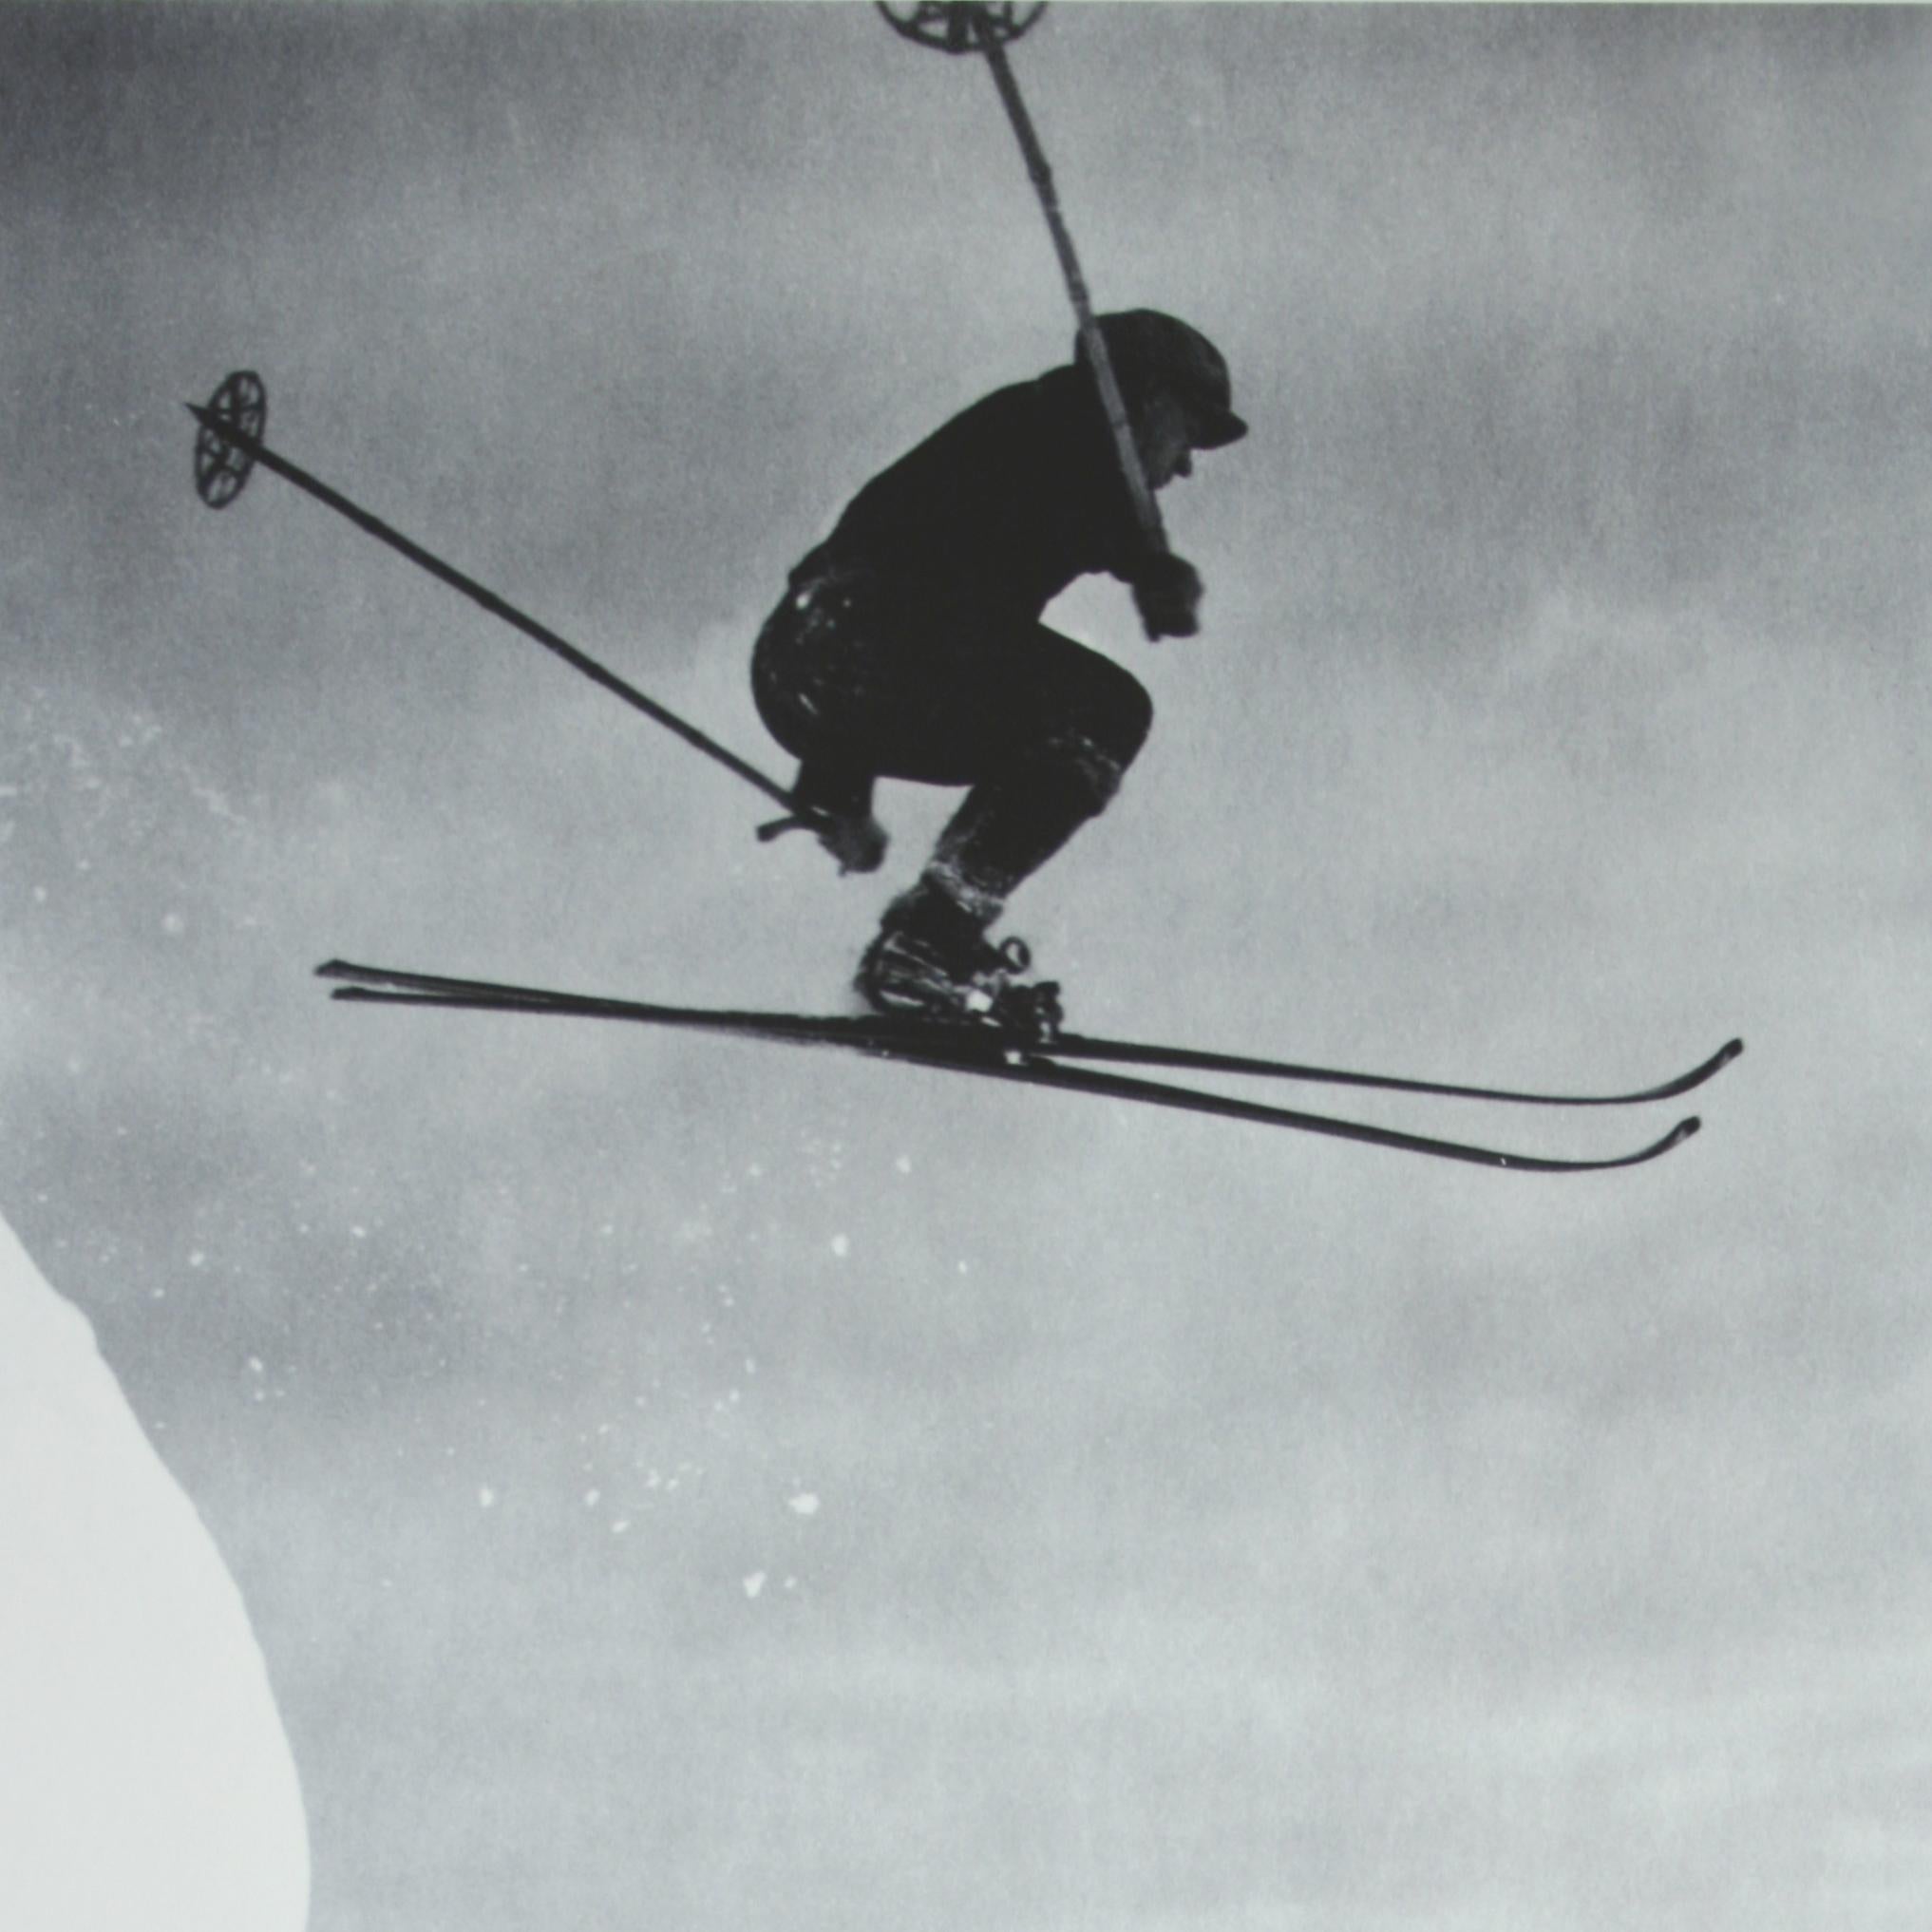 Sporting Art Vintage, Antique Alpine Ski Photograph, Der Sprung For Sale